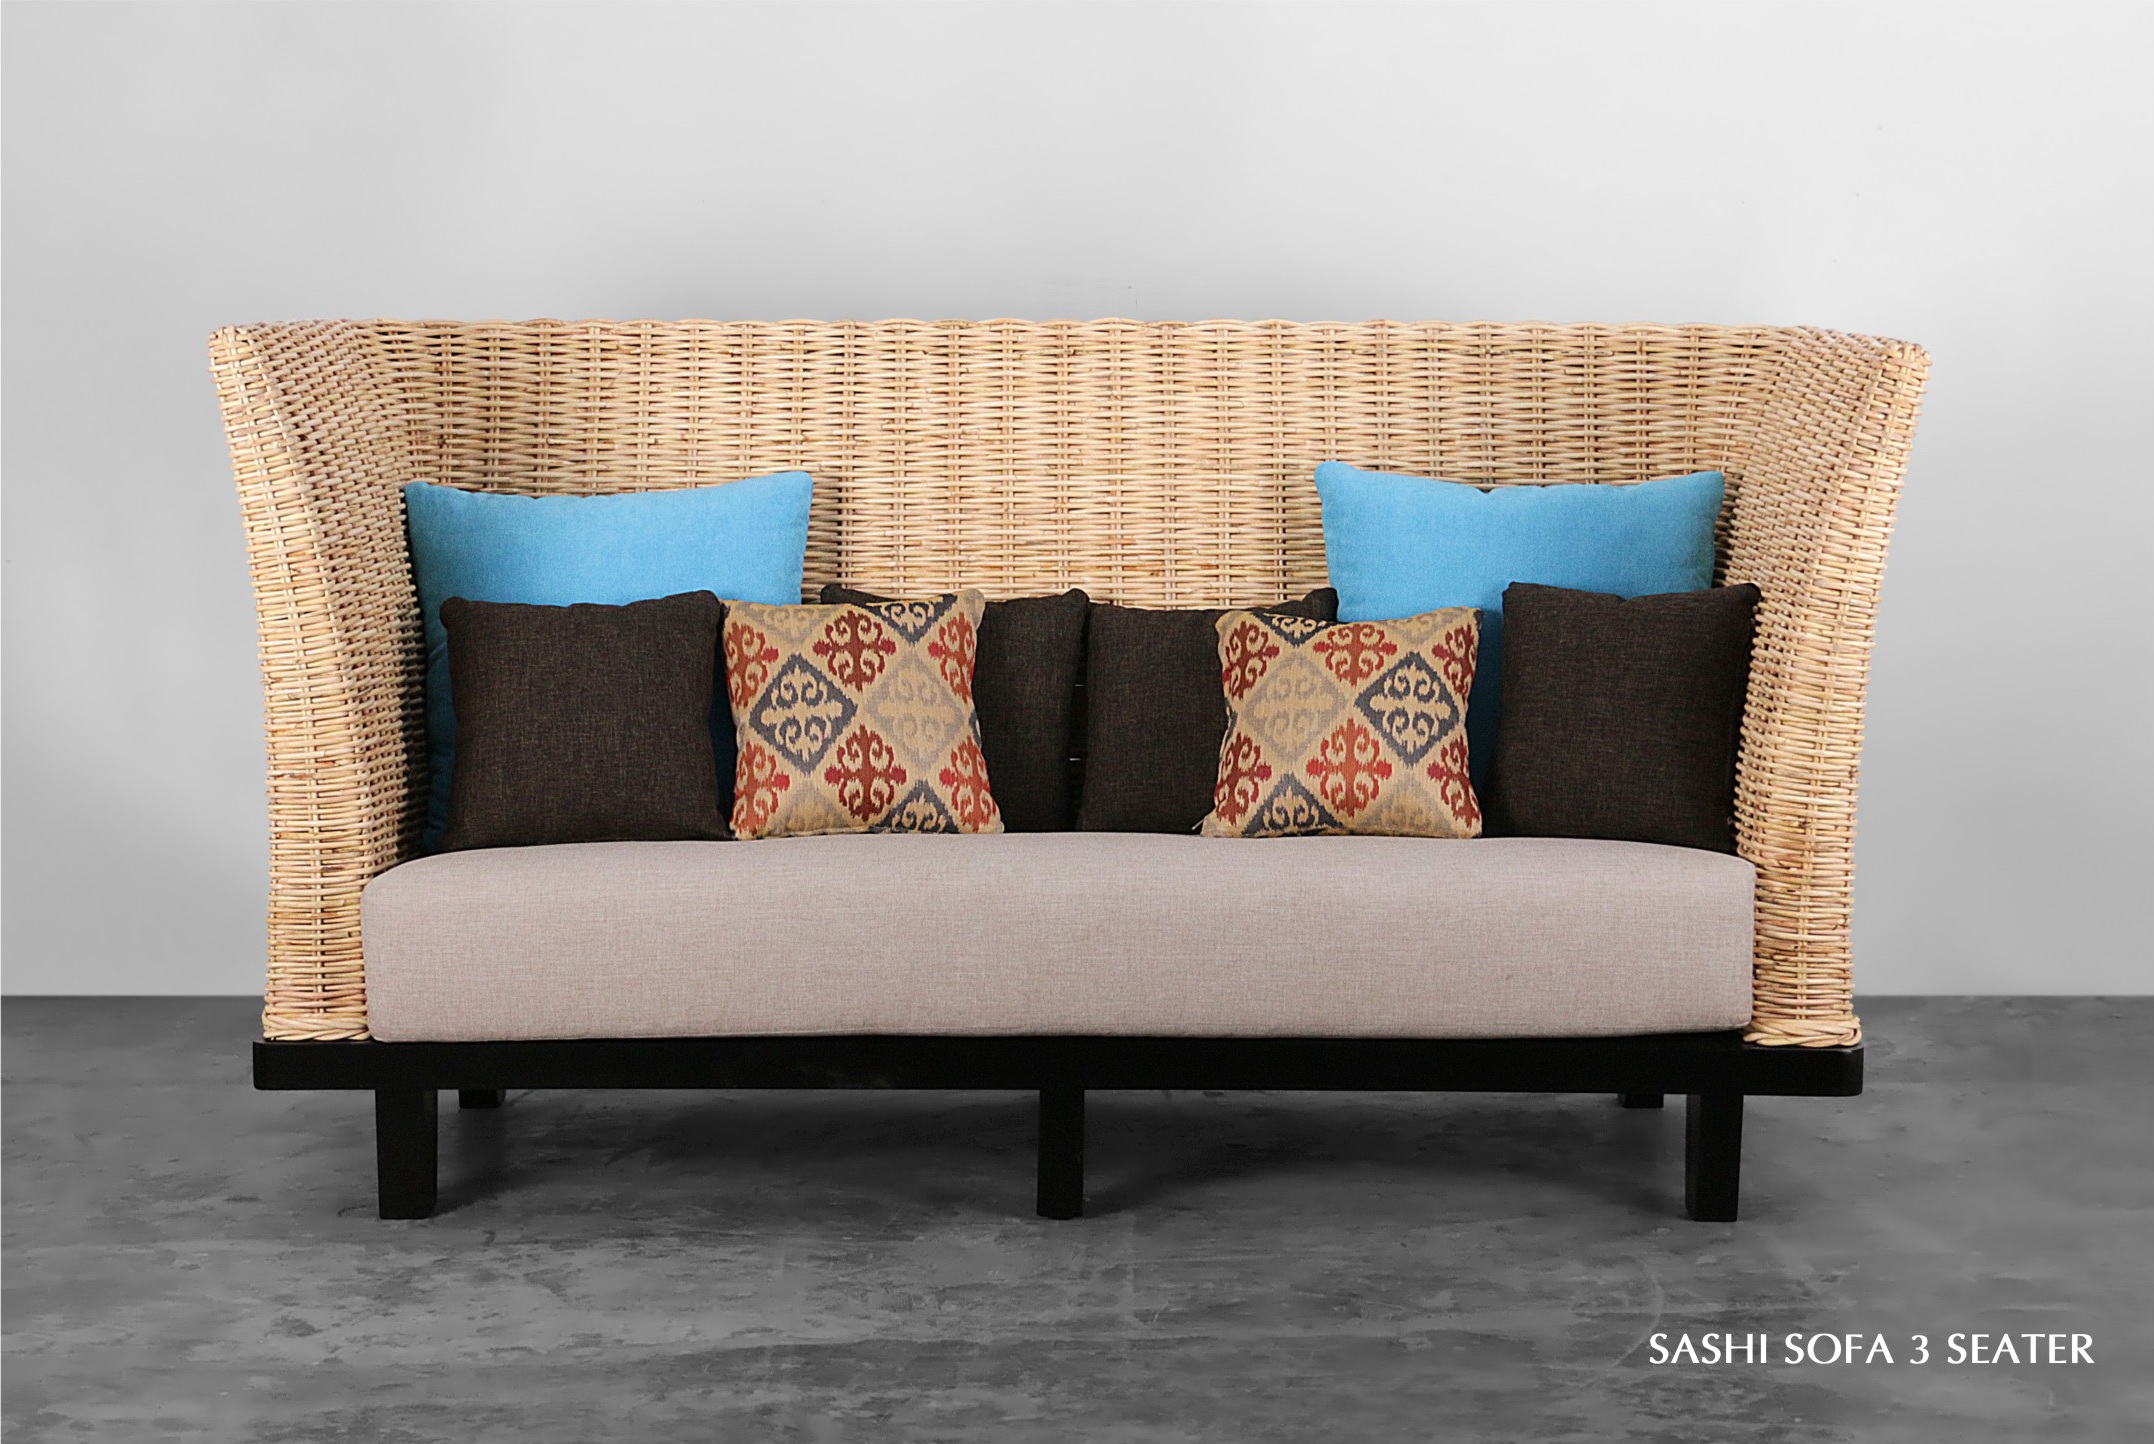 Sashi Rattan Sofa Three Seater